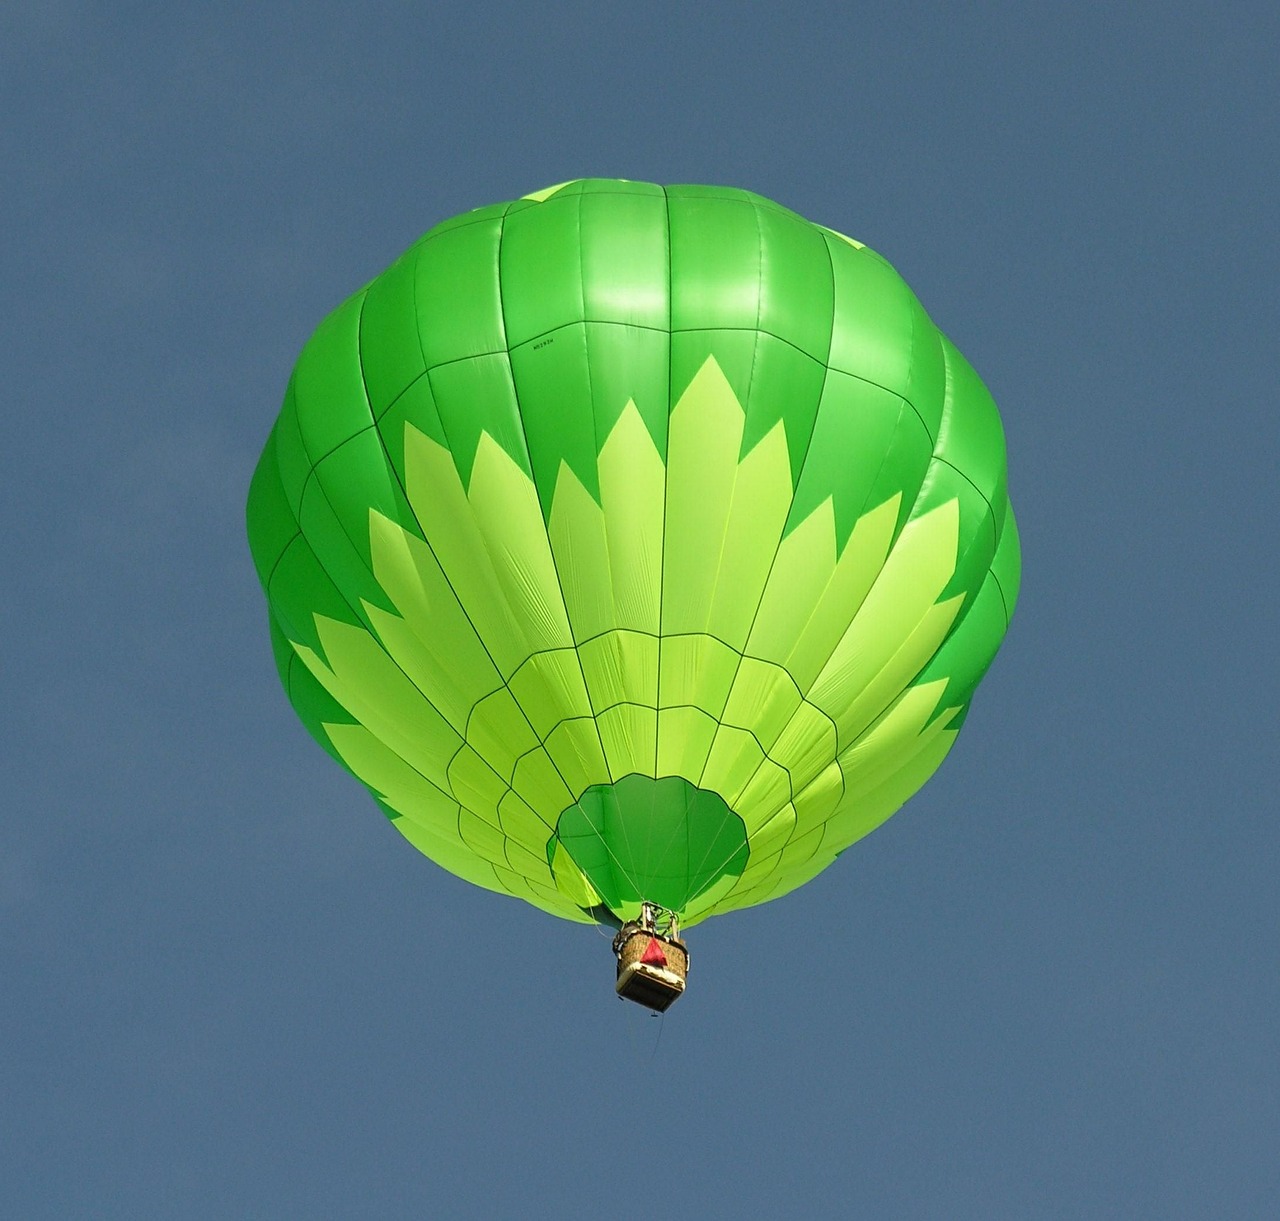 greeley balloon ballooning free photo